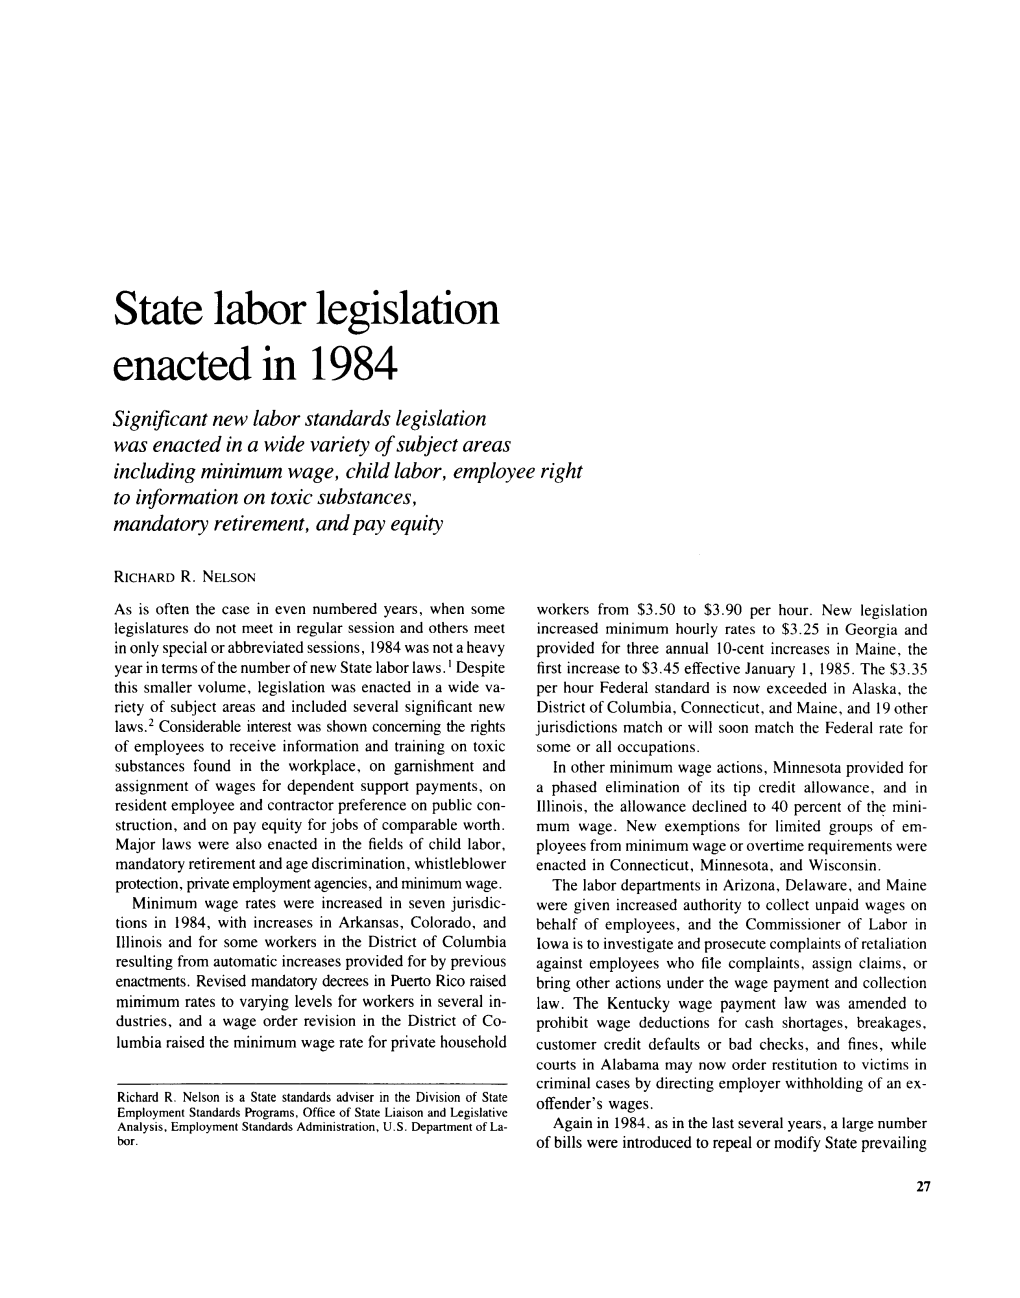 State Labor Legislation Enacted in 1984